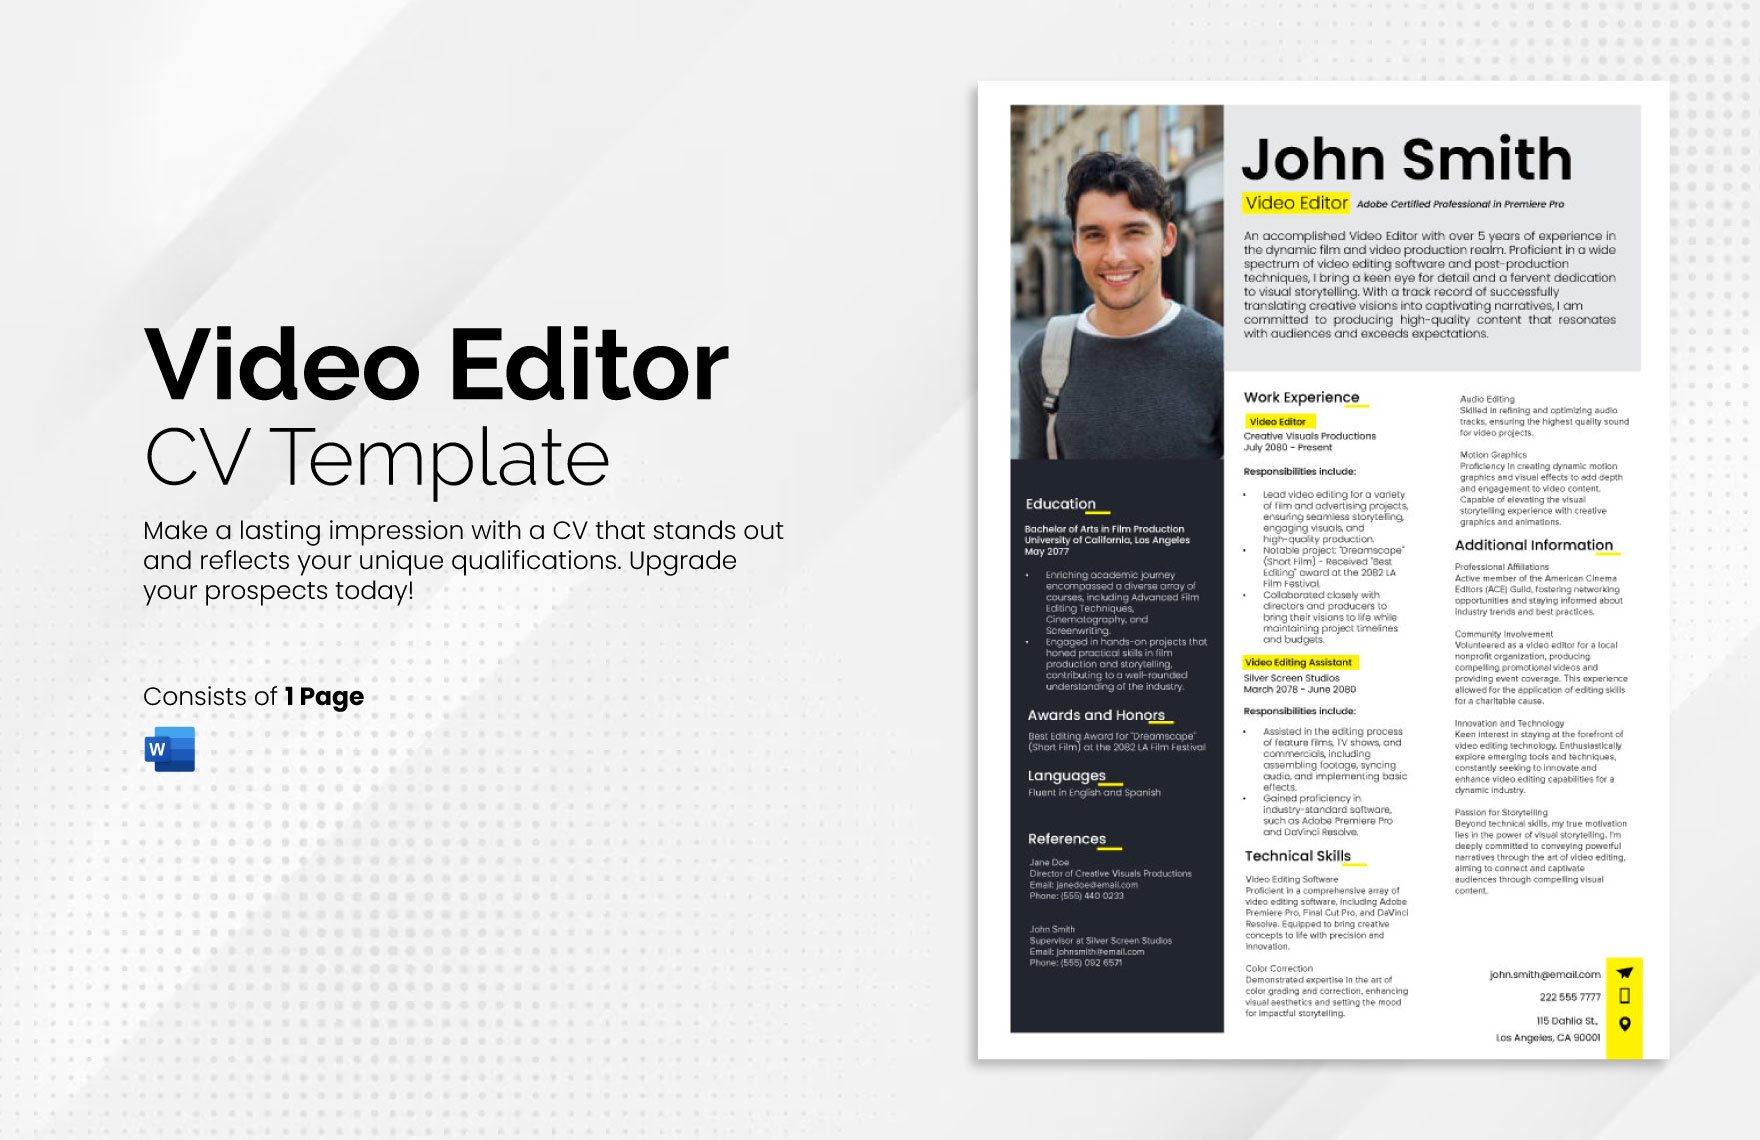 Video Editor CV Template